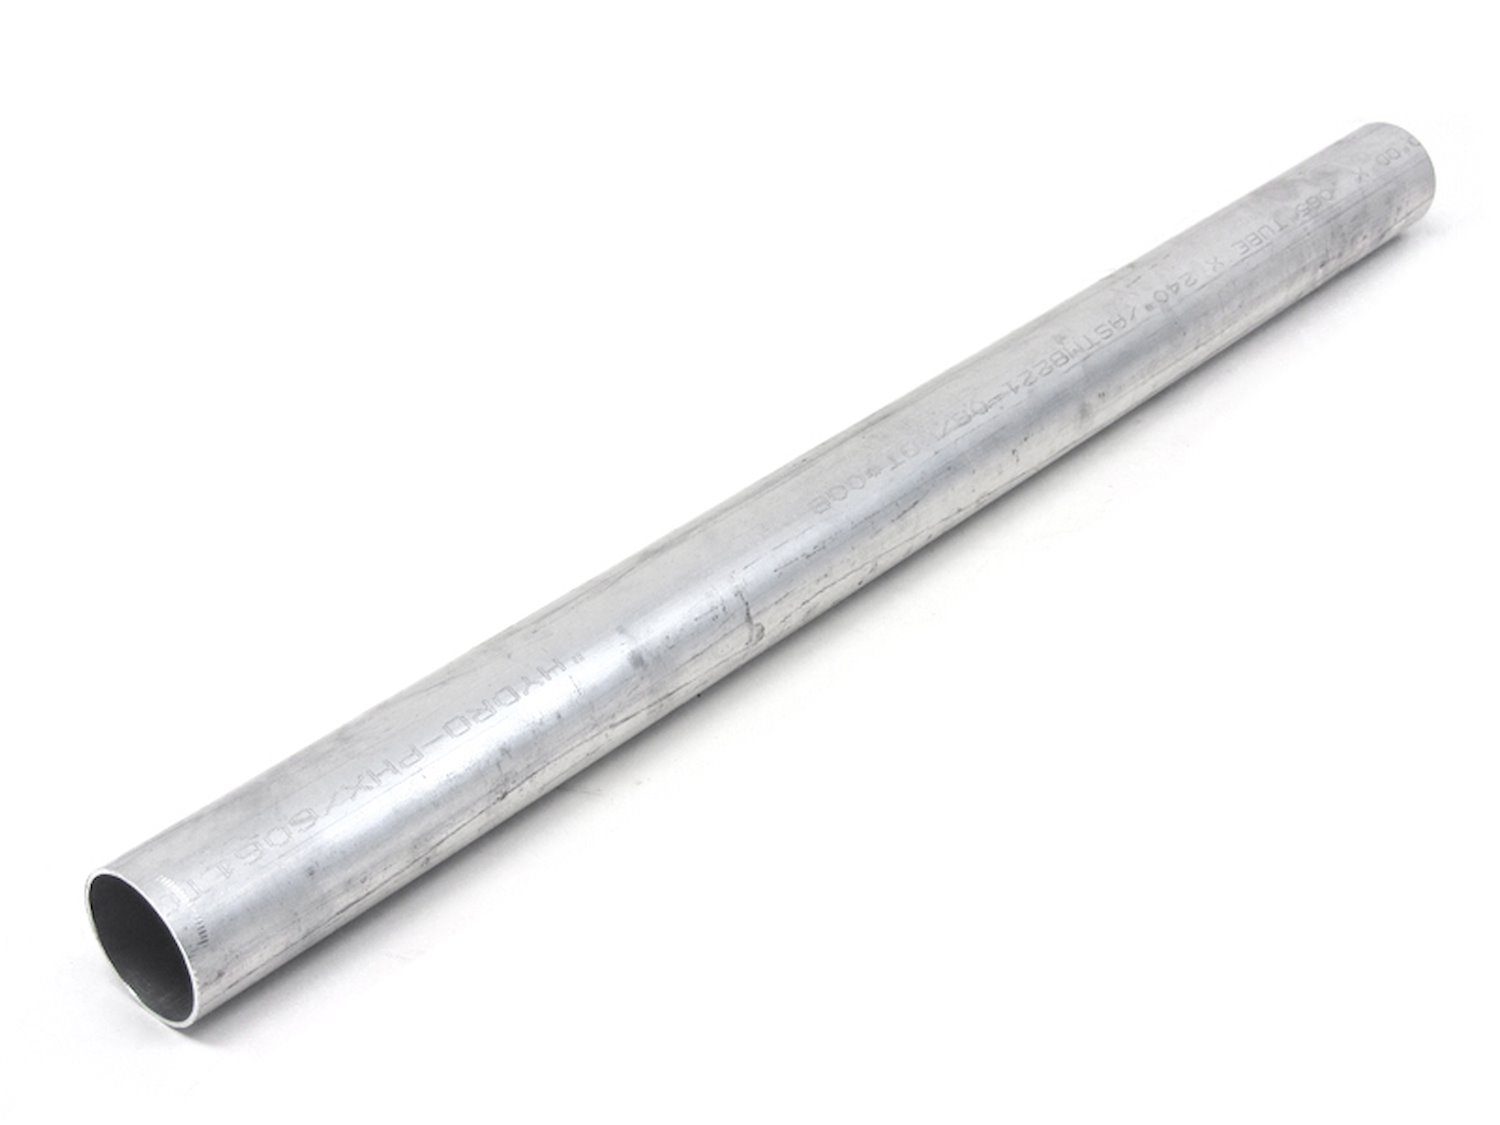 AST-3F-187 Aluminum Tubing, 6061 Aluminum, Straight Tubing, 1-7/8 in. OD, Seamless, Raw Finish, 3 ft. Long